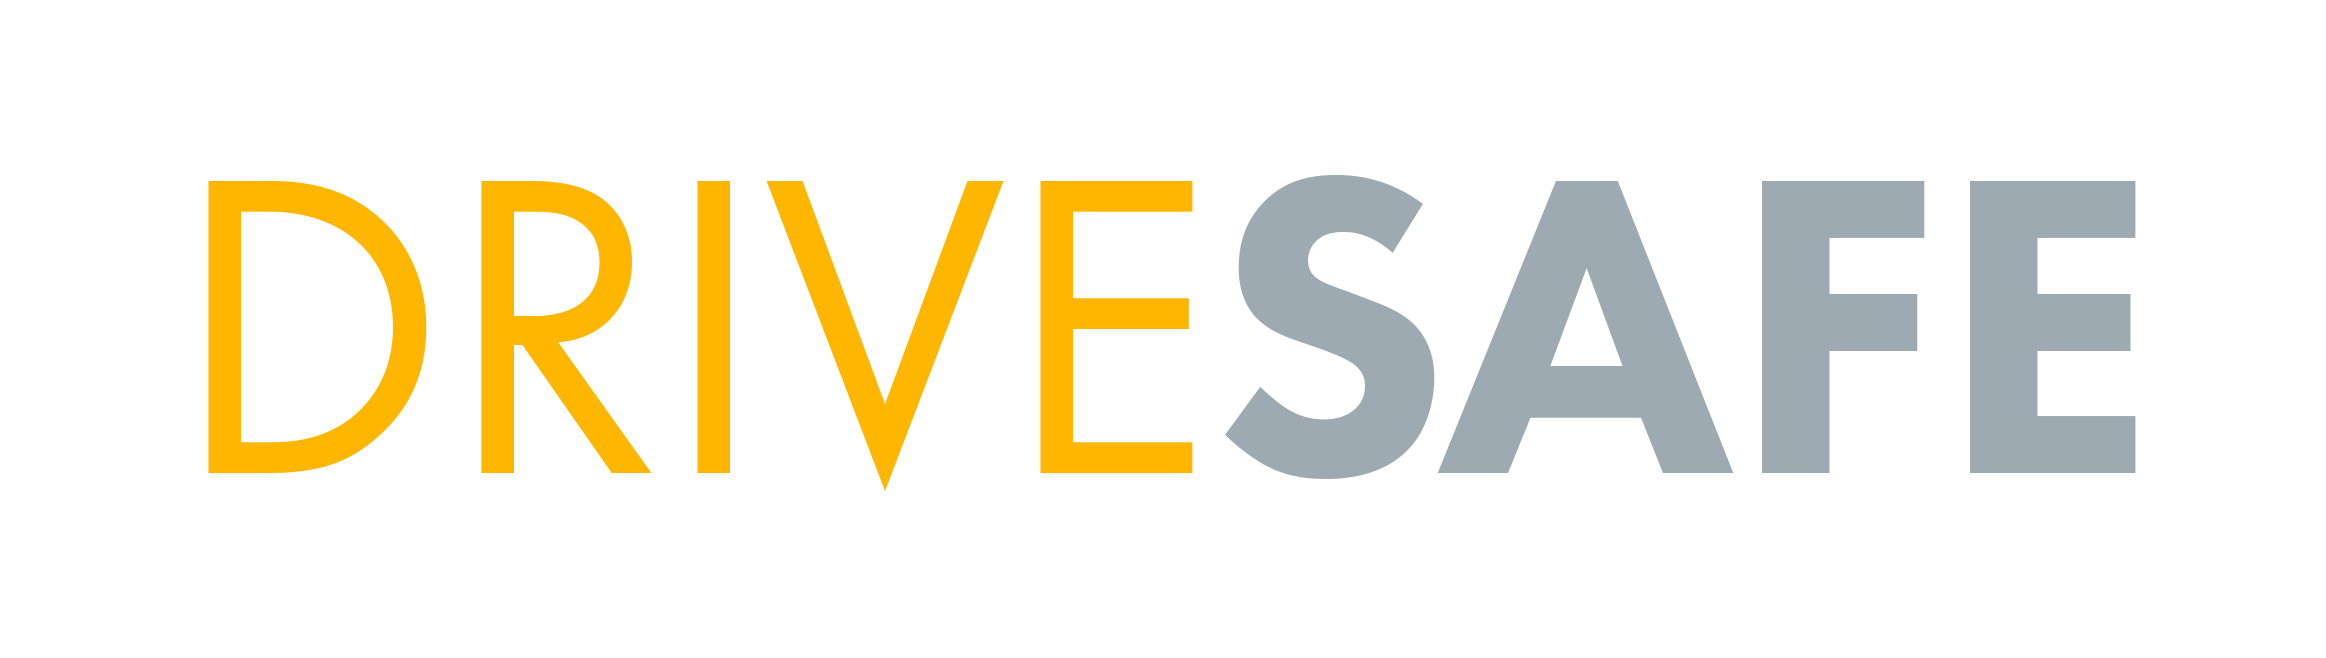 DriveSafe logo no background